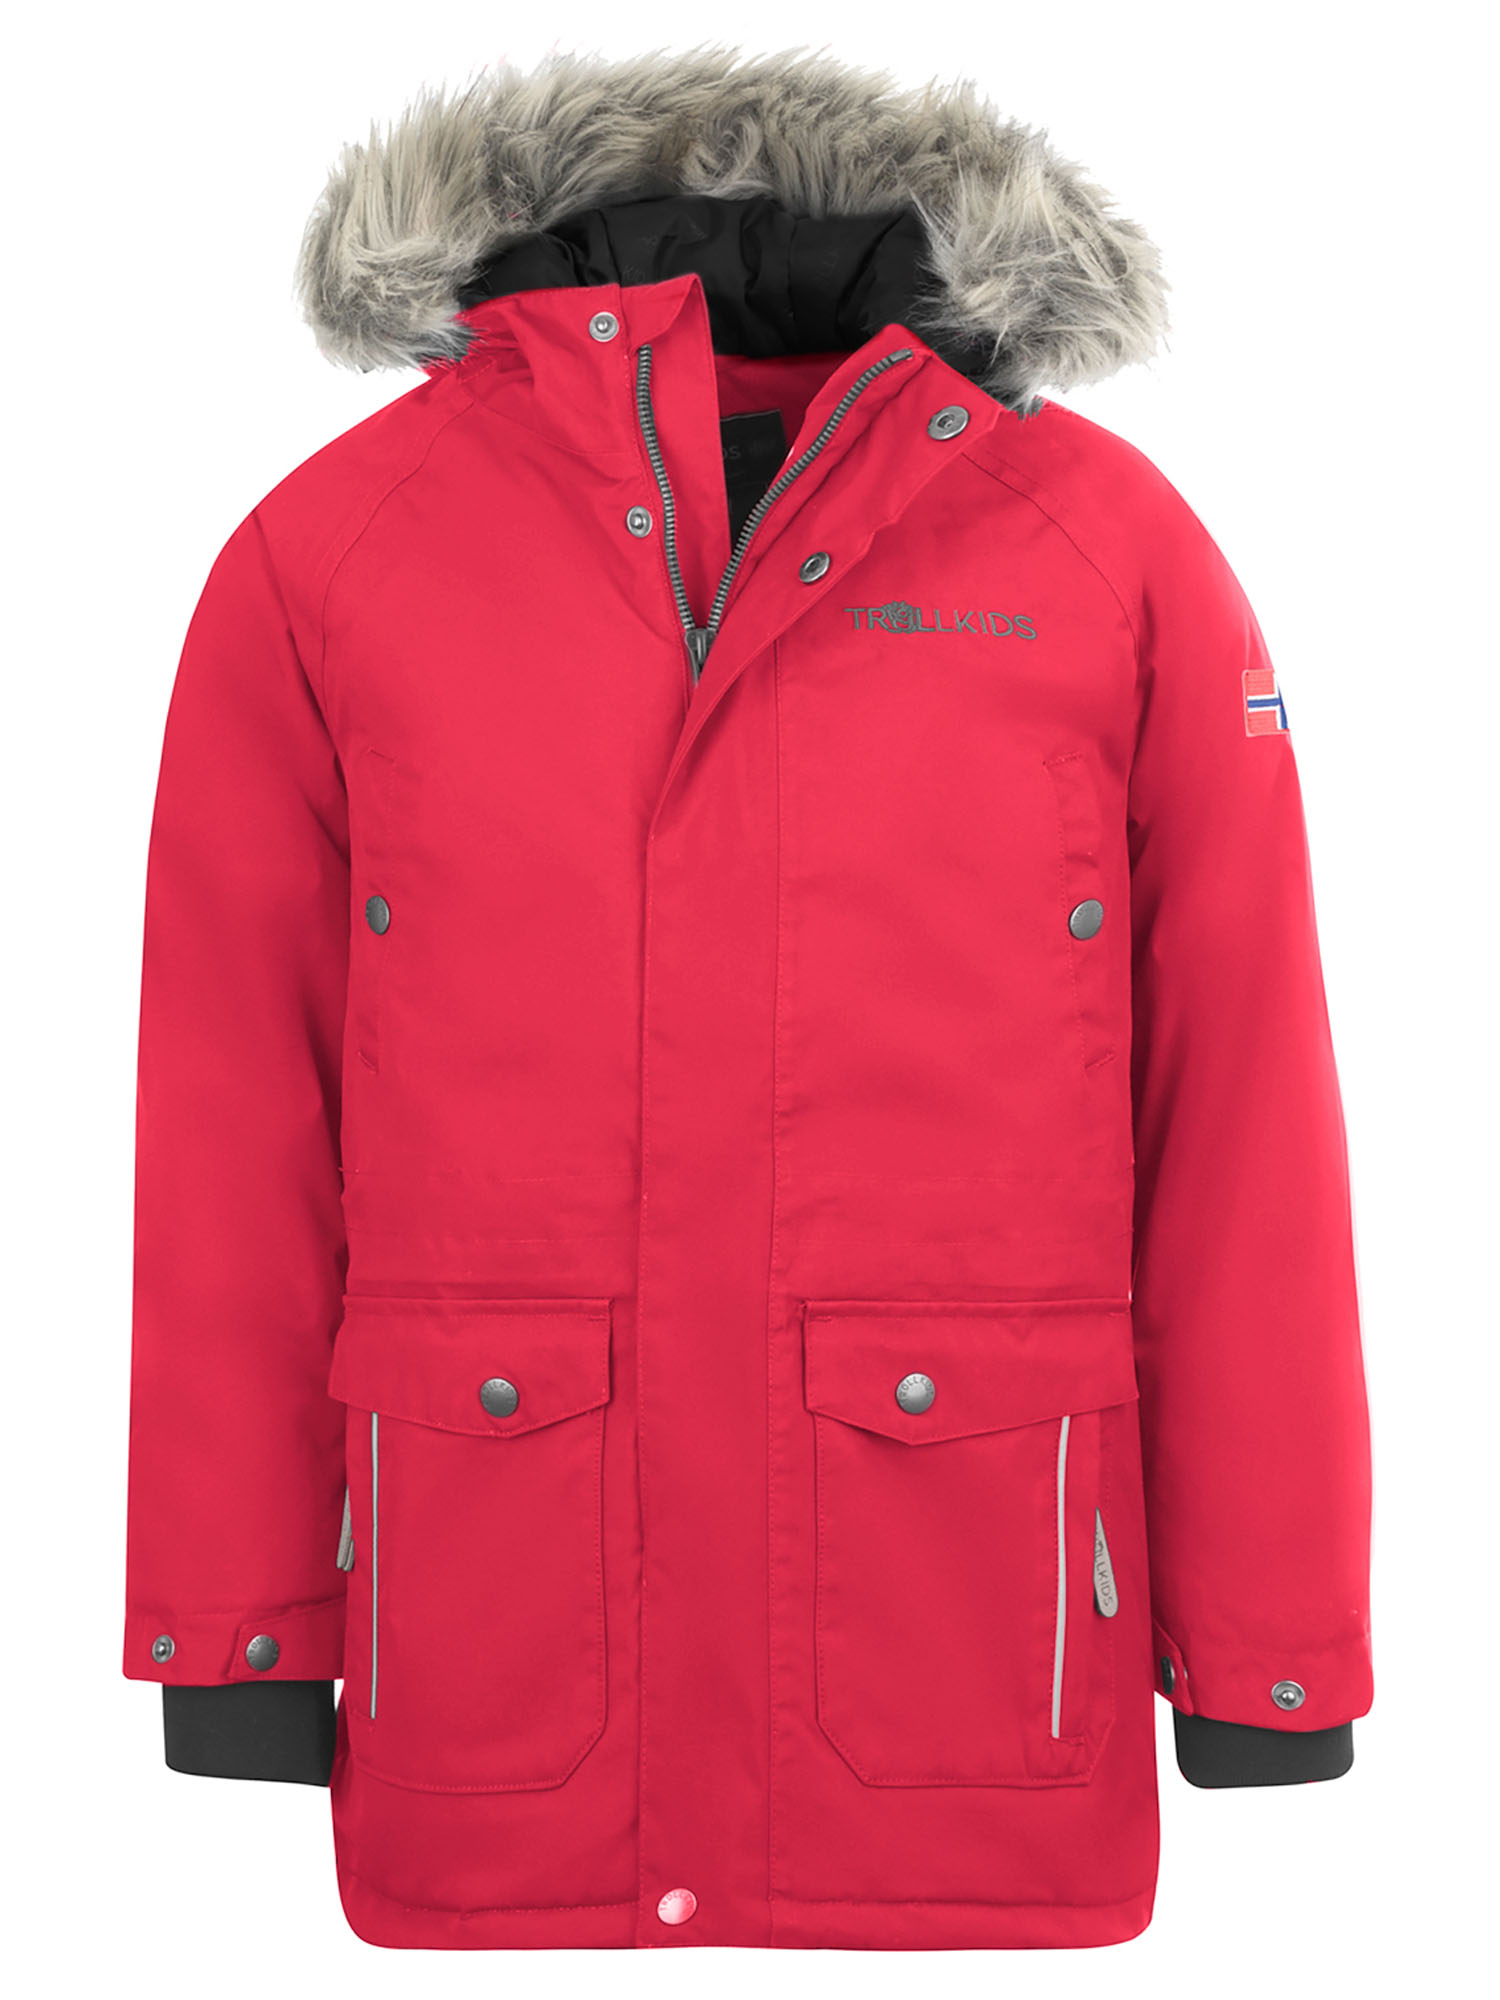 Куртка Детская Trollkids Nordkapp Bright Red (Рост:176) куртка детская roxy snowy tale snow jacket girl s bright white naive rg р 122